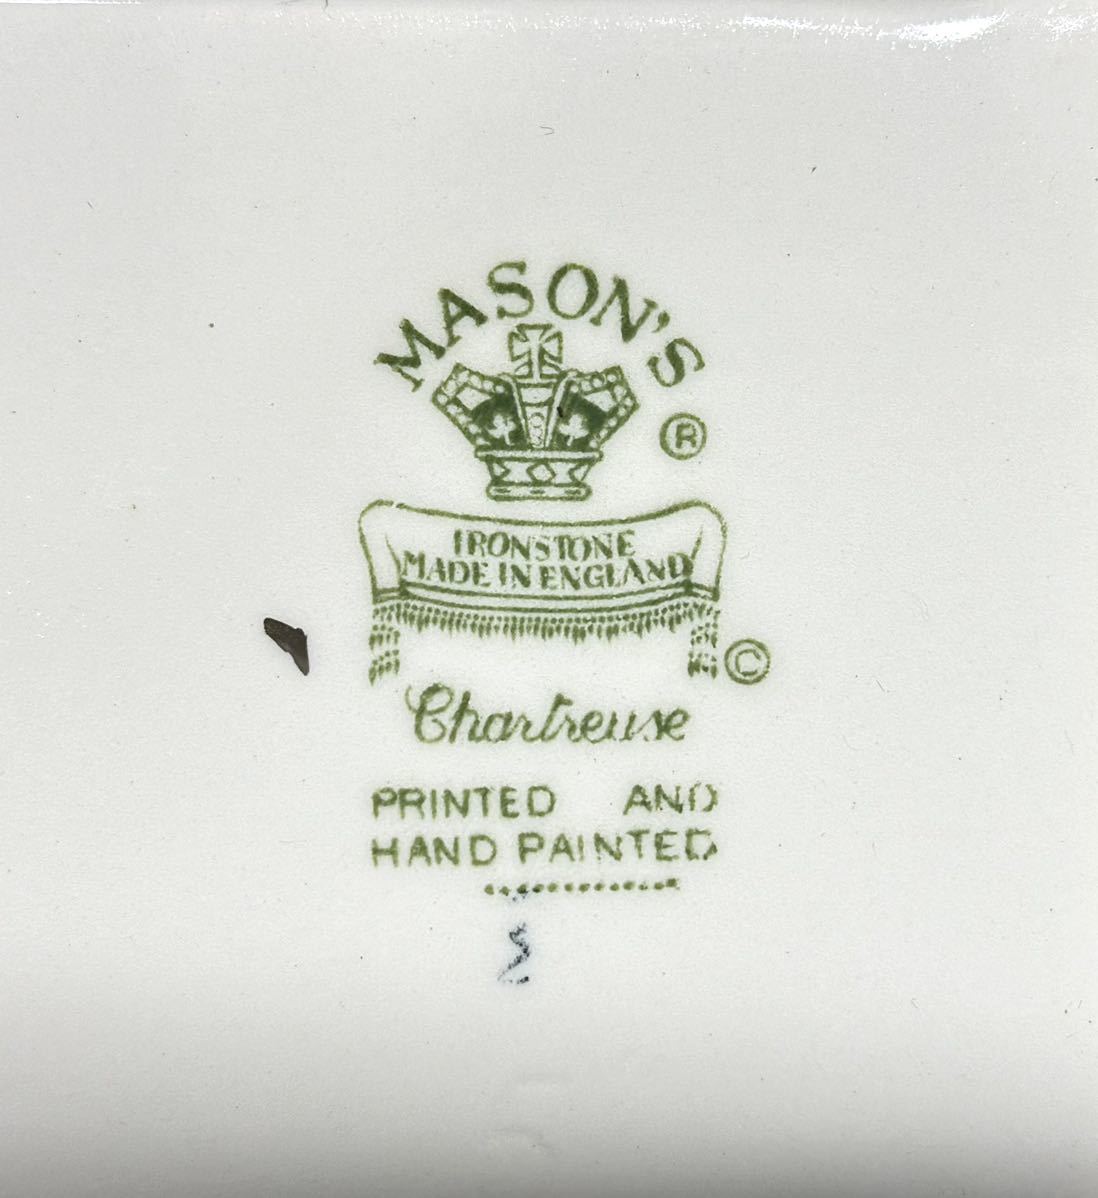 MASON'S メイソンズ 皿 イギリス製 陶器 お皿 深皿 小皿 取り皿 アンティーク■兵庫県姫路市から c2 24-118_画像6